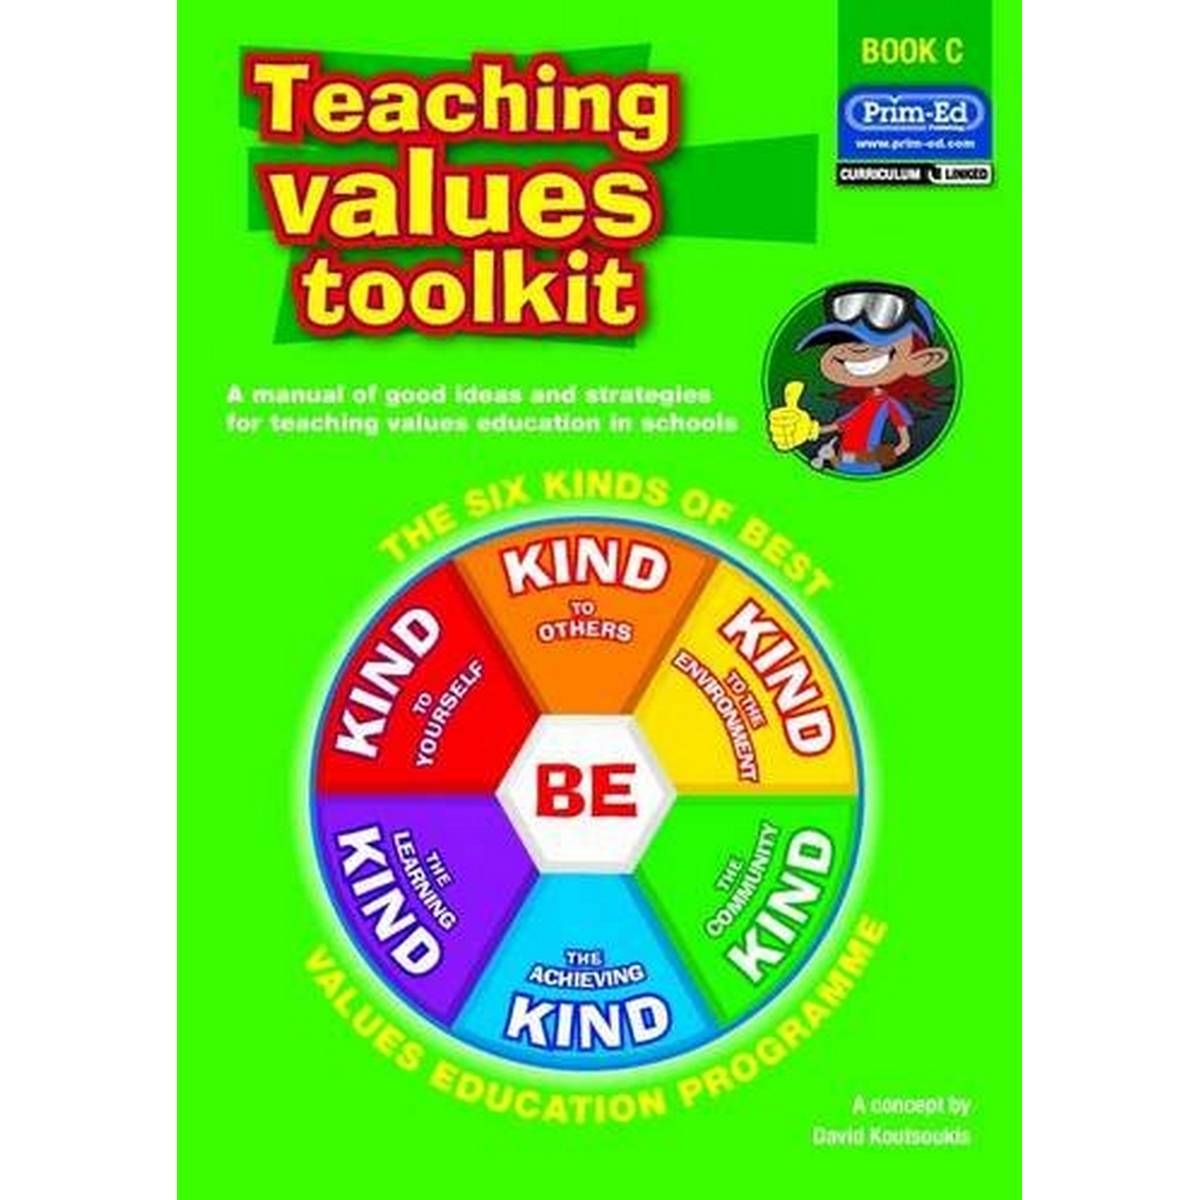 Teaching Values Toolkit Book C